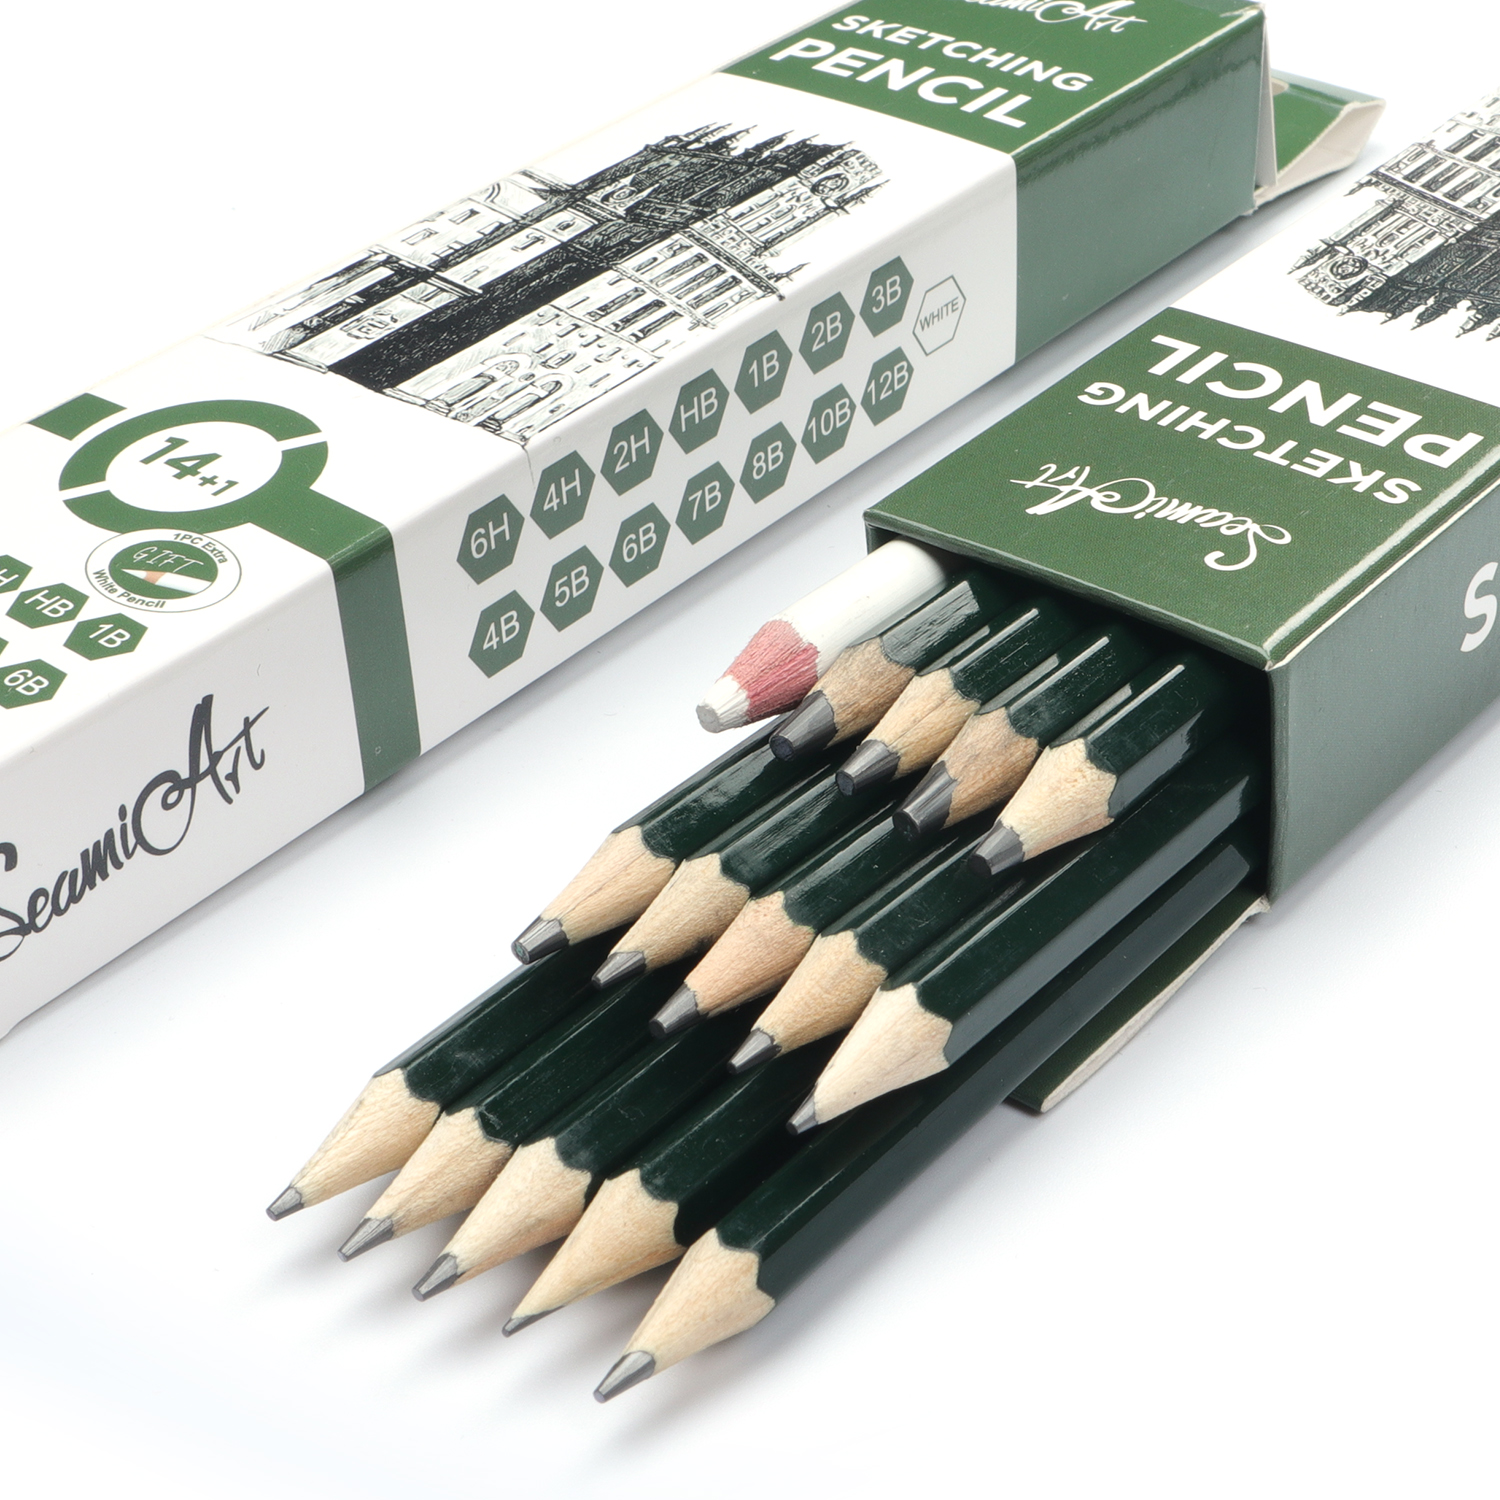 Seamiart 14pcs/Set 6H-12B Standard Art Drawing Sketching HB Wooden Pencils Set dengan 1pc White Pencil Office School1